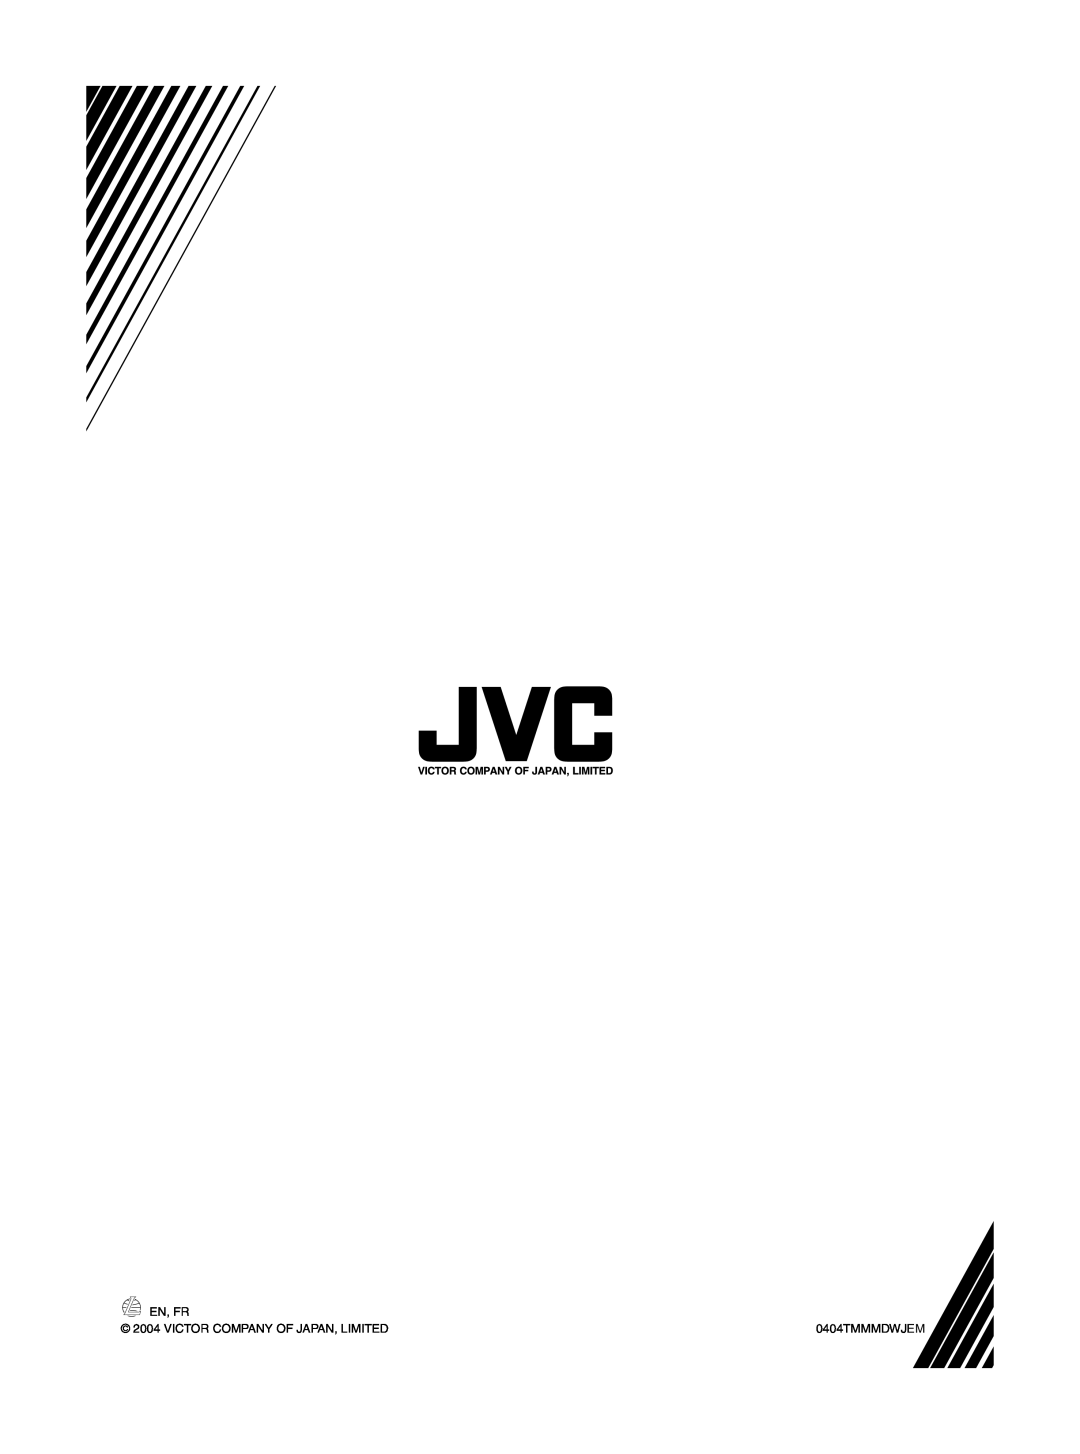 JVC TH-S2, TH-S3 manual En, Fr, Victor Company Of Japan, Limited, 0404TMMMDWJEM 